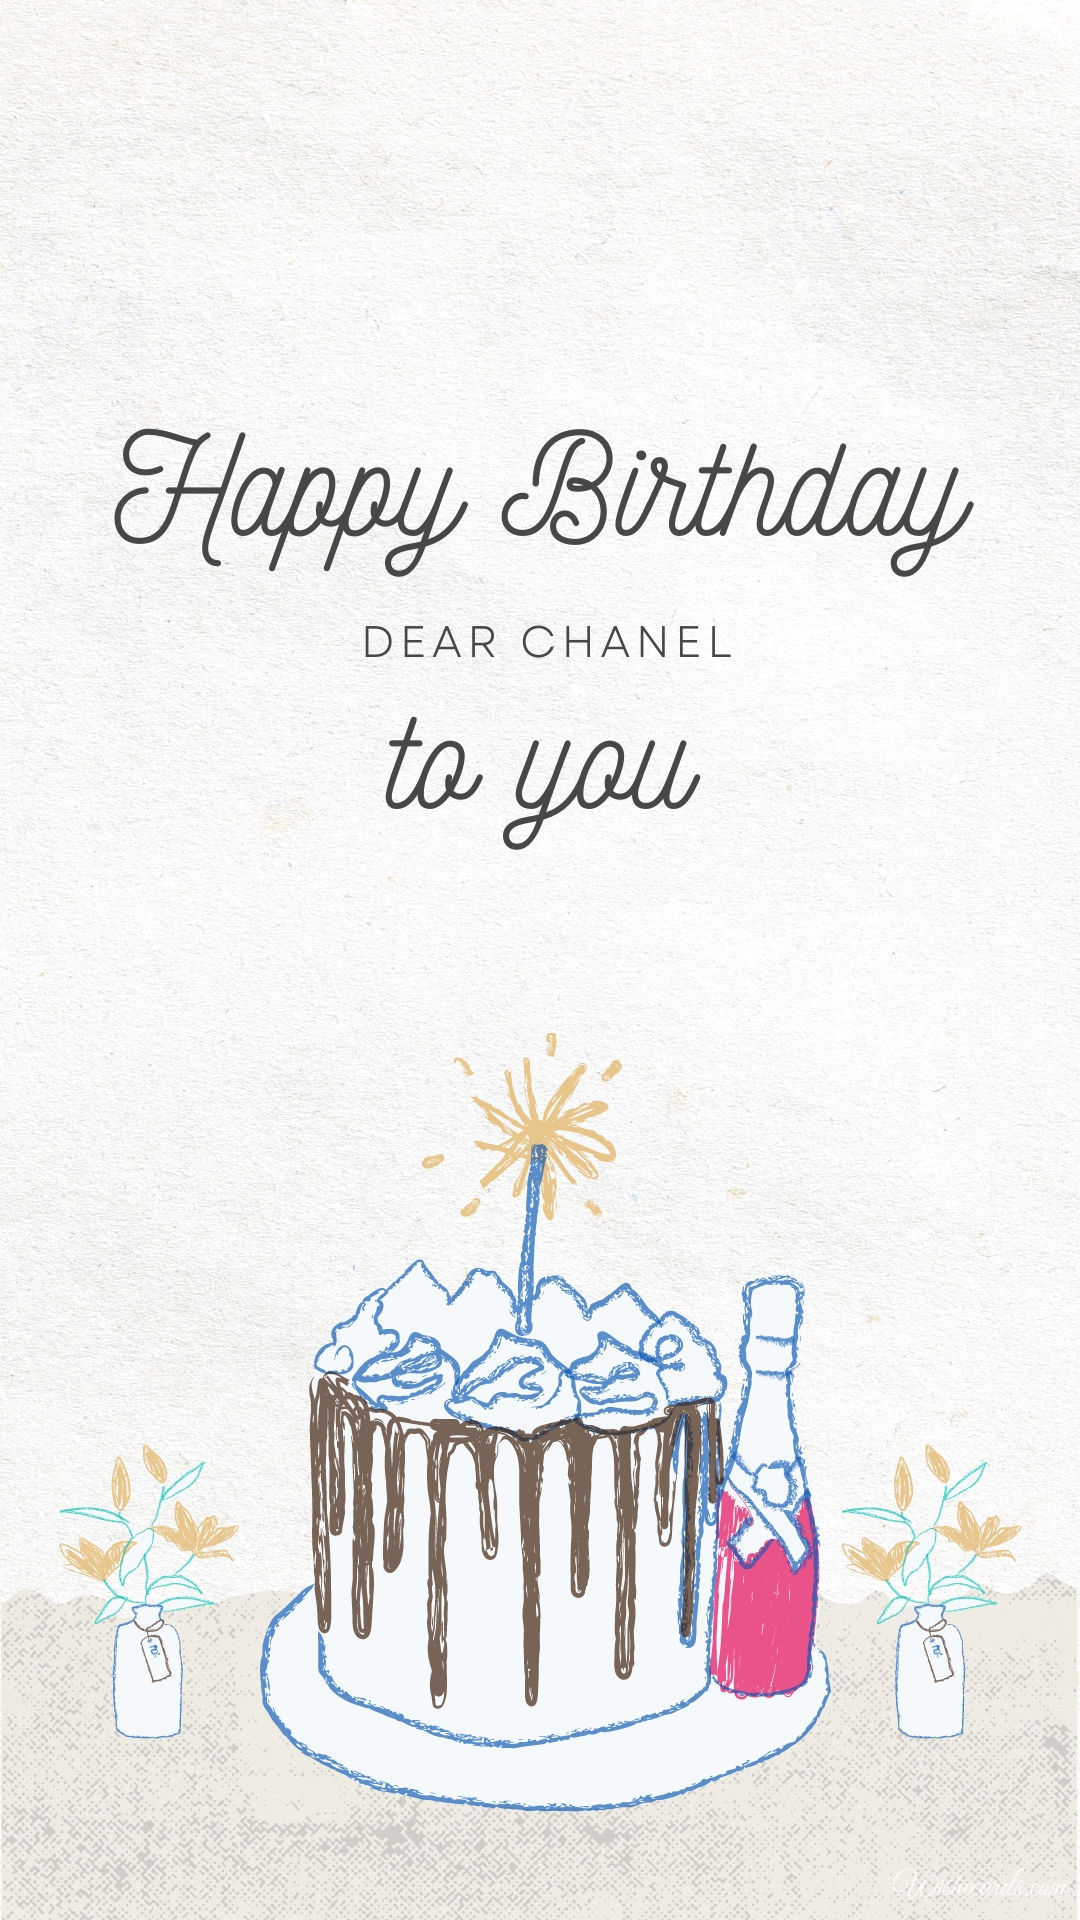 Happy Birthday Chanel Cake Image